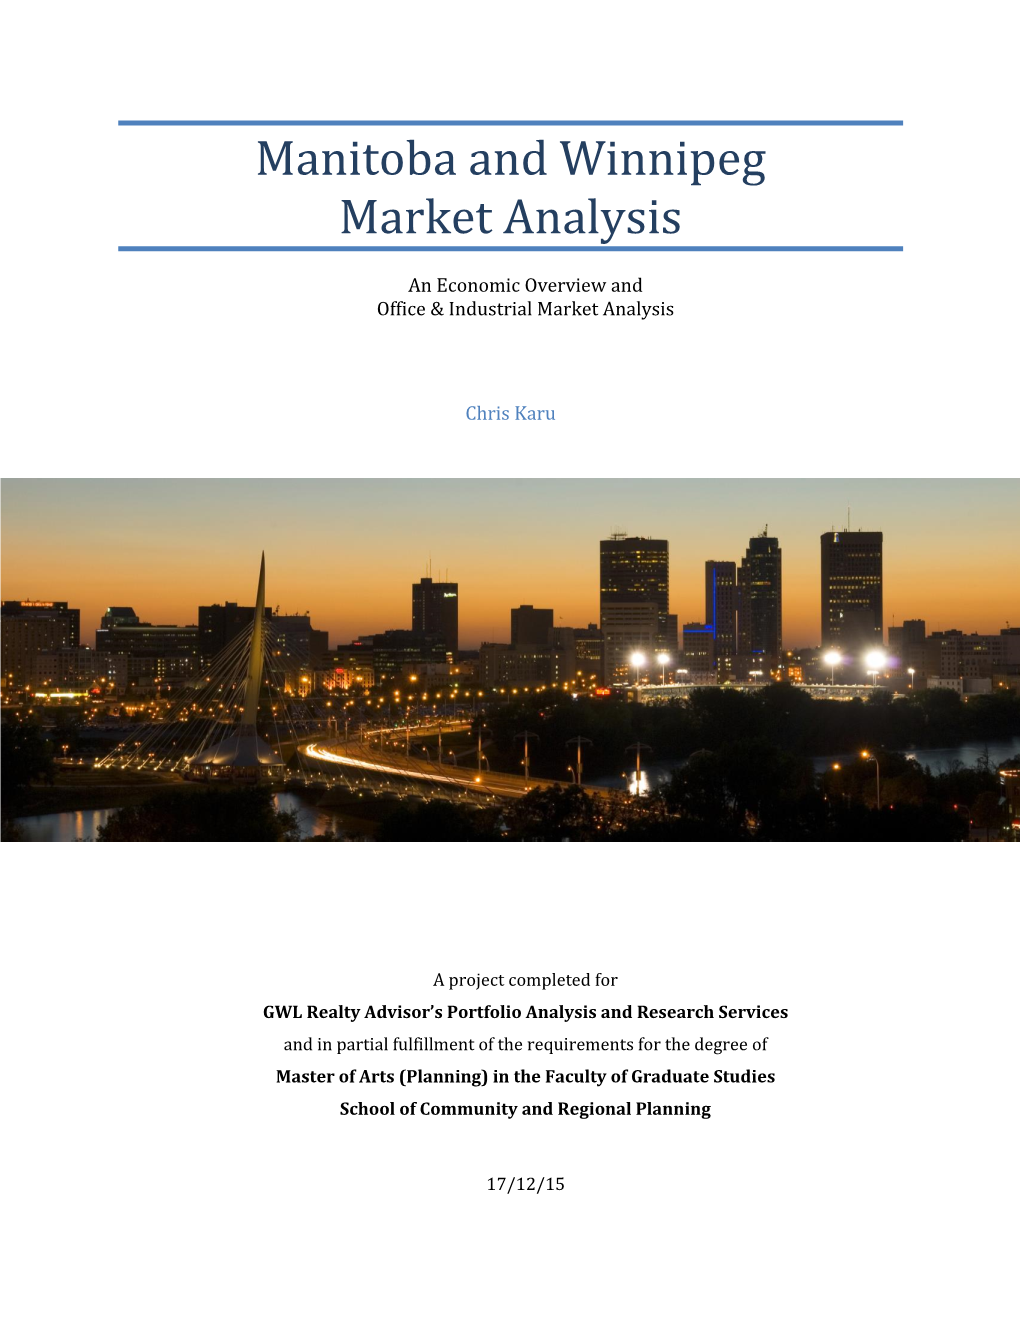 Manitoba and Winnipeg Market Analysis